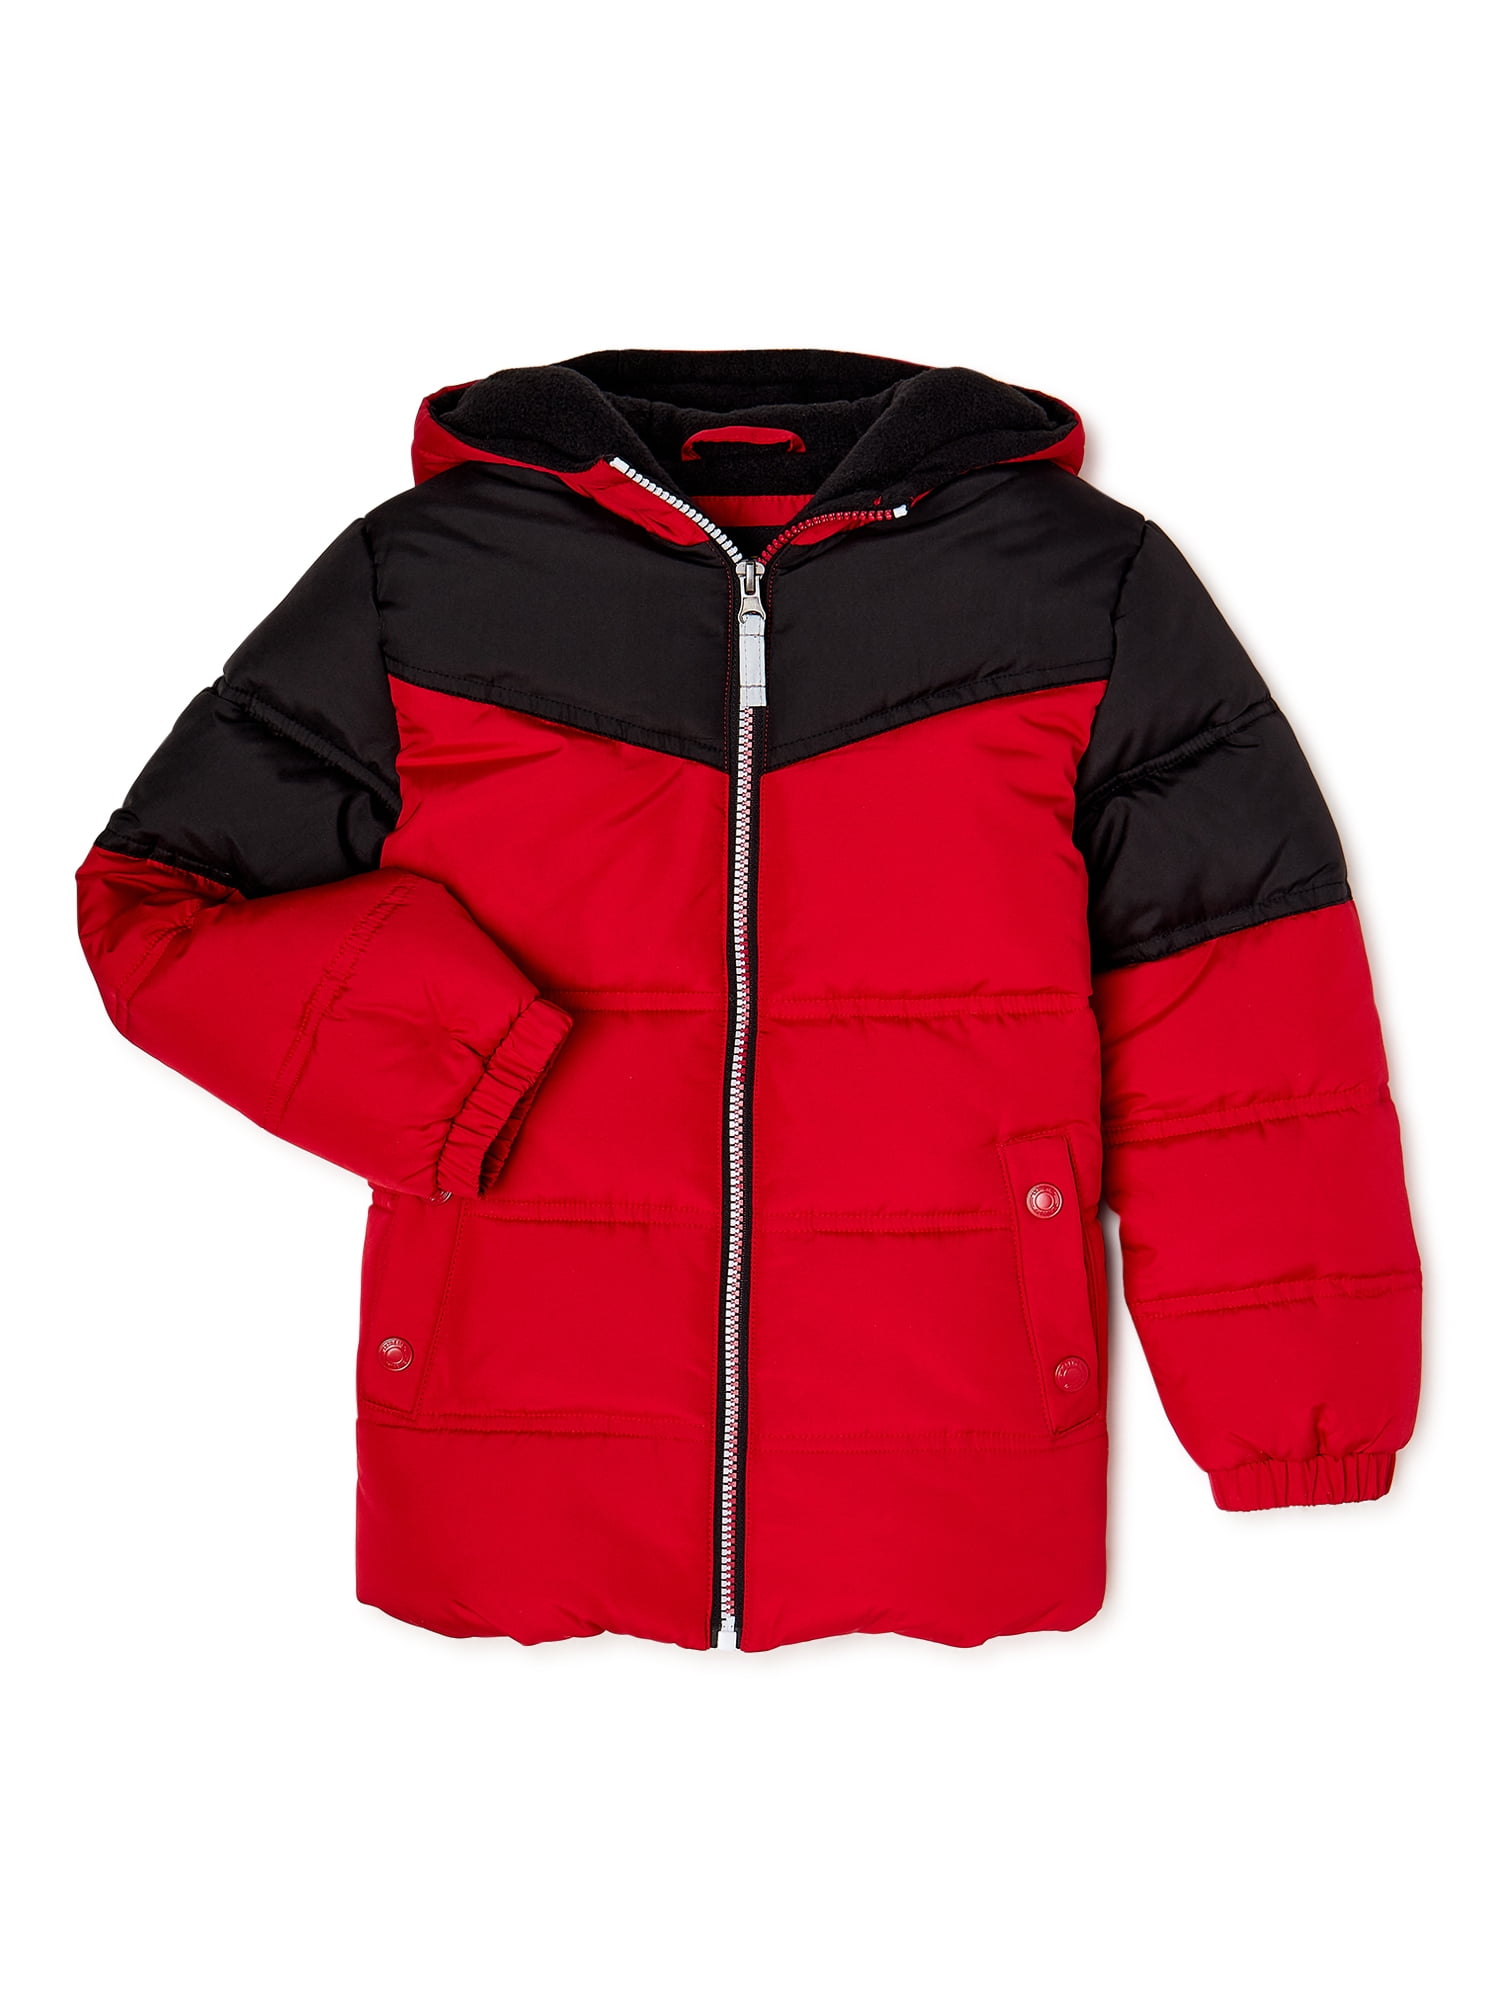 IKALI Boy Girl Packable Down Jackets Lightweight Outerwear Spring Hood Coat 2-12Y